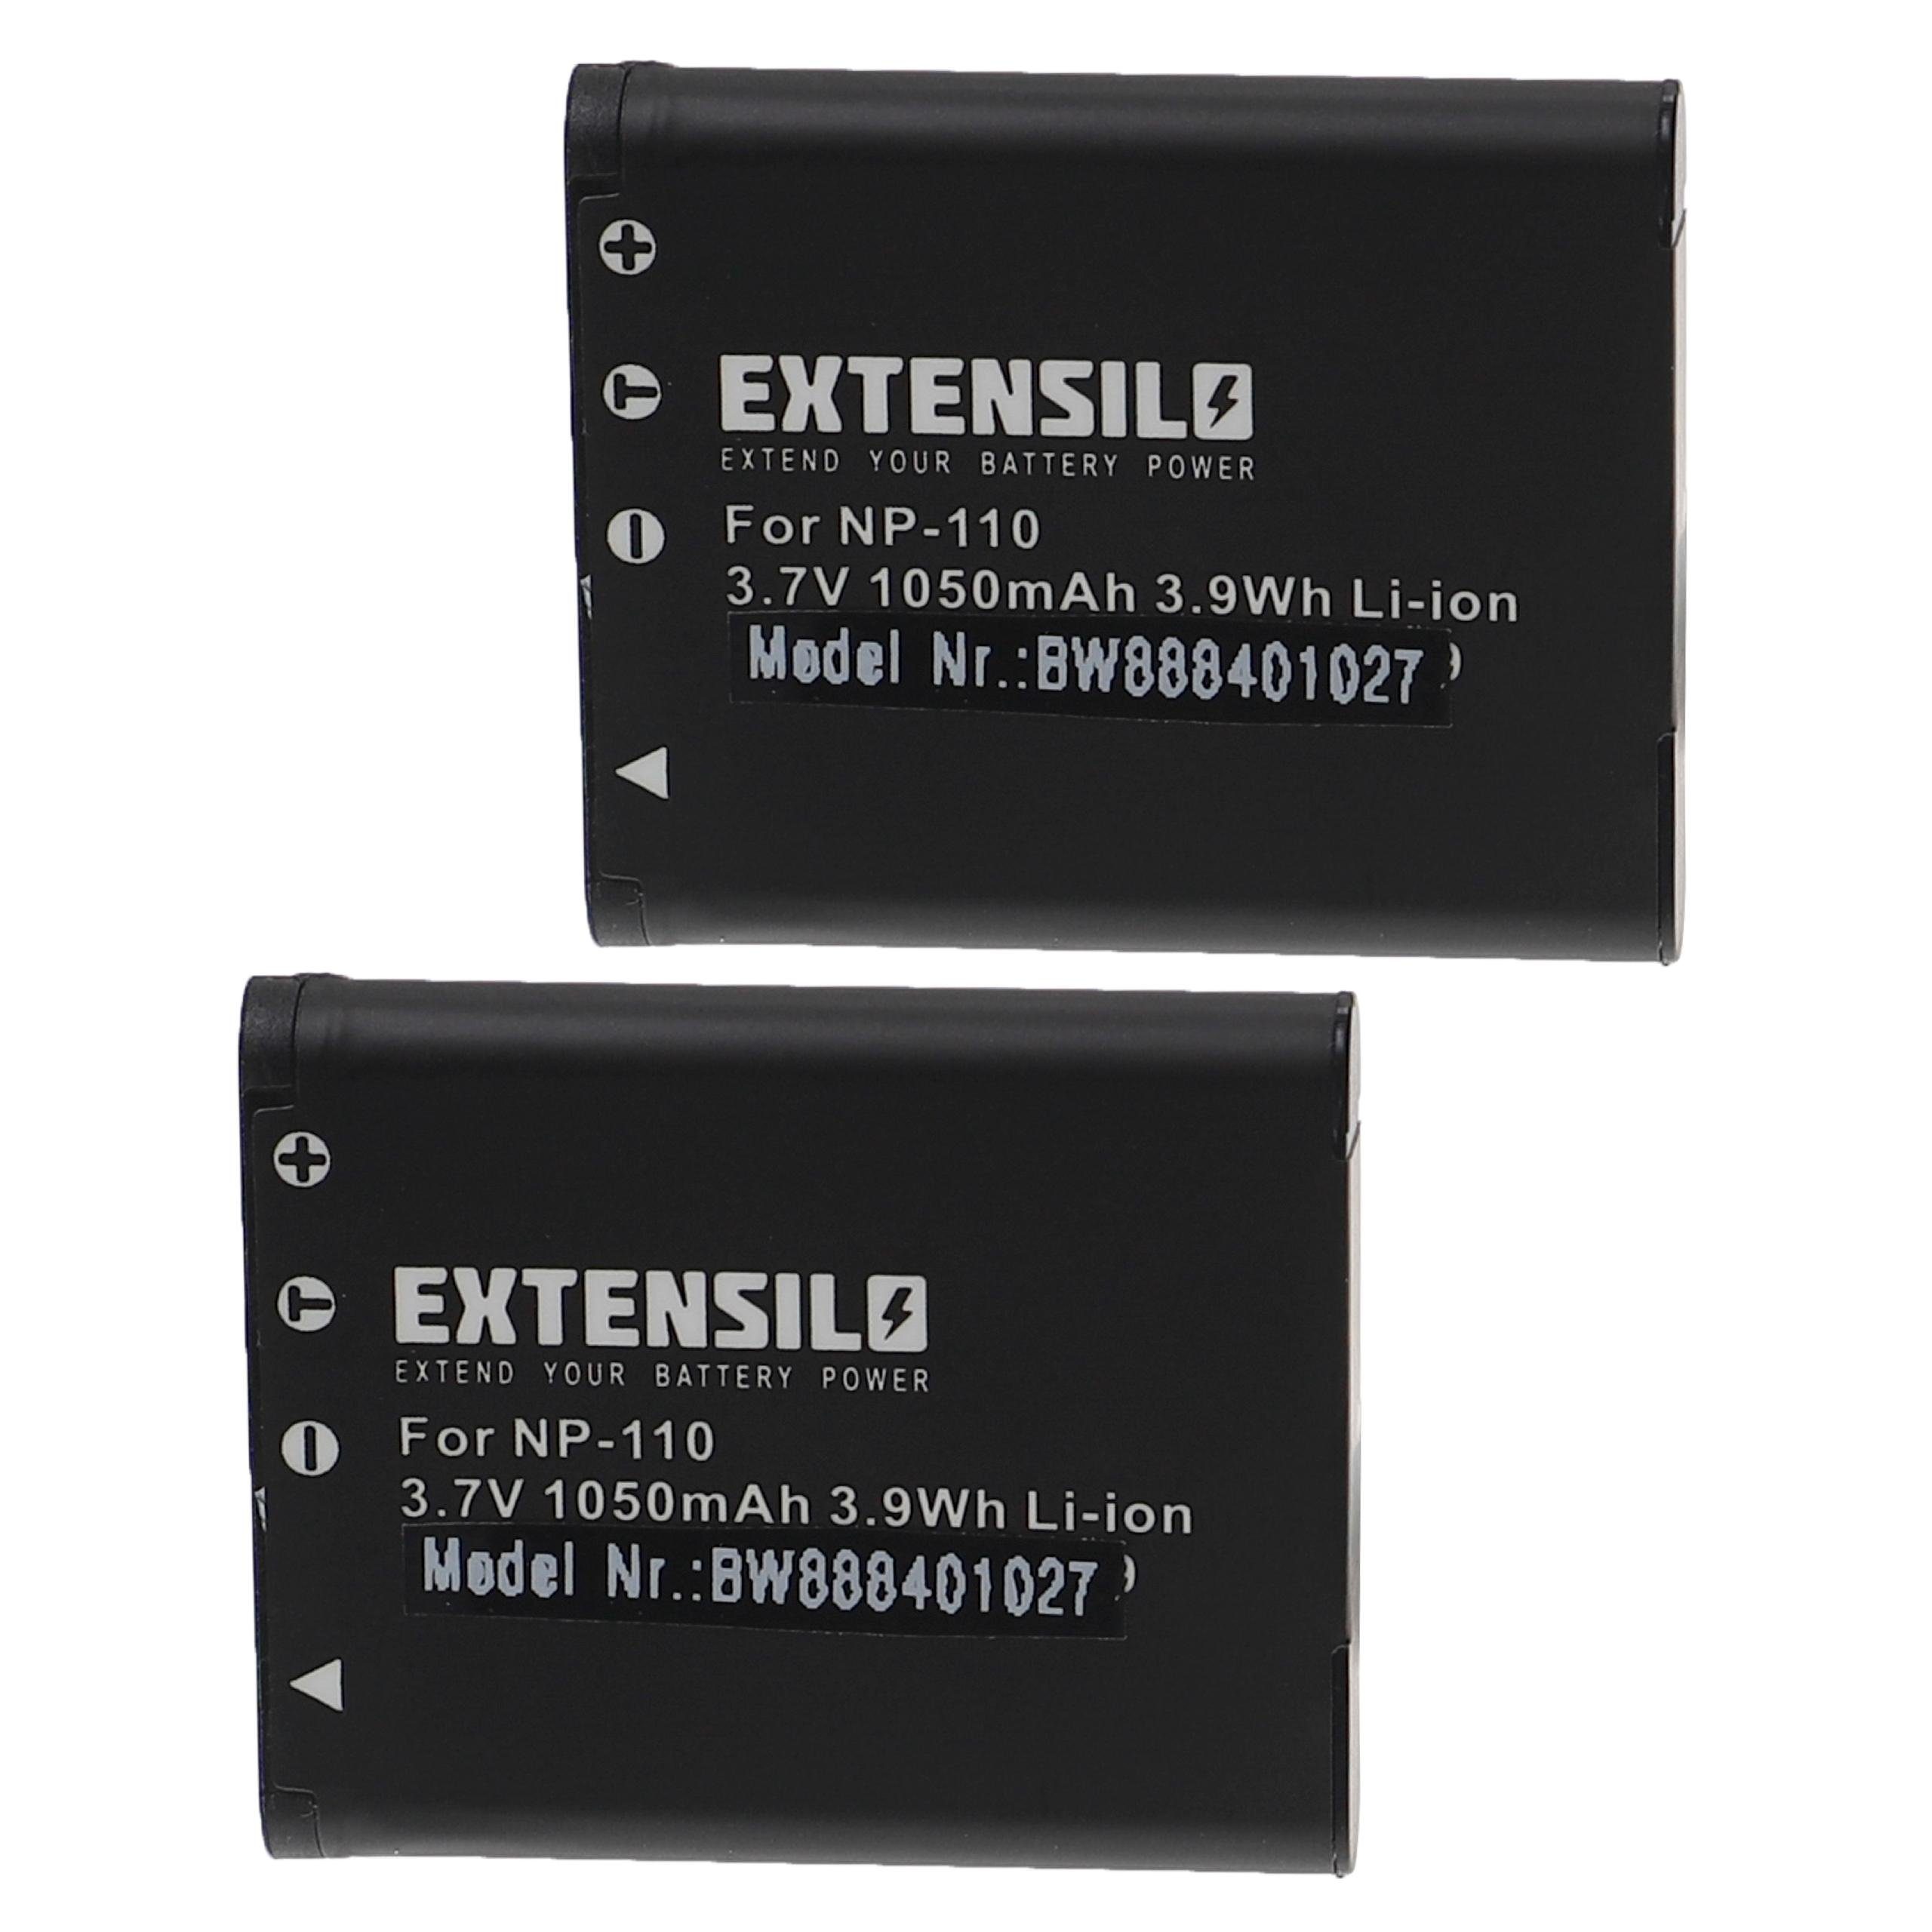 EX-Z2300PE Exilim Extensilo Casio mit EX-Z2300PK, kompatibel Kamera-Akku 1050 Li-Ion (3,7 V) mAh Zoom